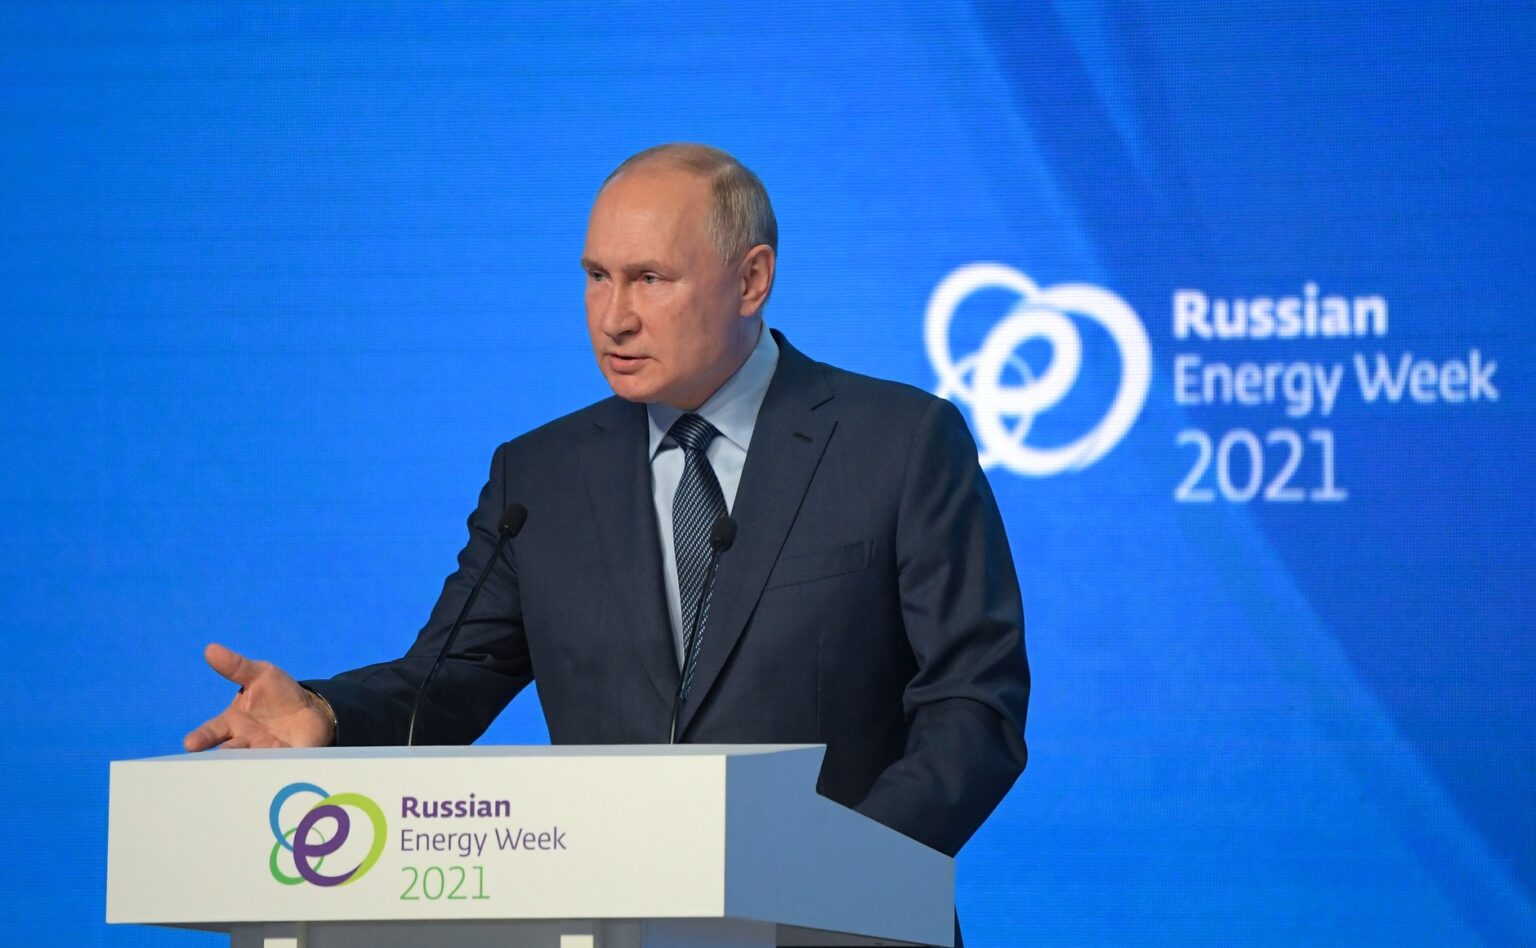 Prezydent-Rosji-Wladimir-Putin-Fot-Kremlinru-1536×948